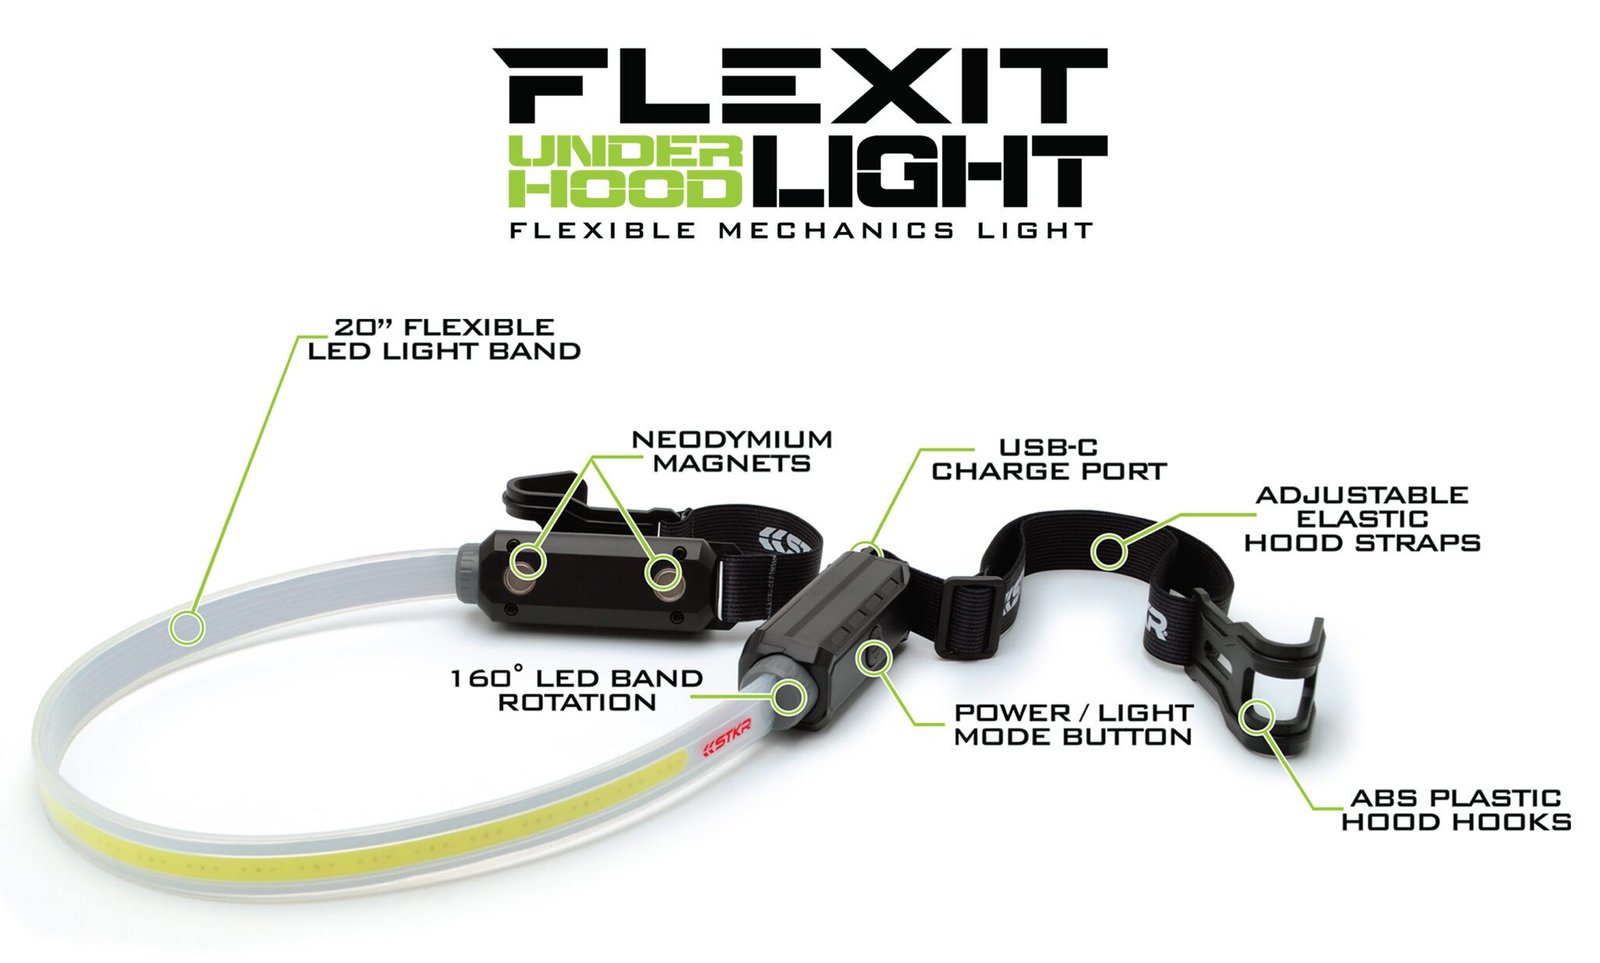 FLEXIT Under Hood Light feature callouts poster